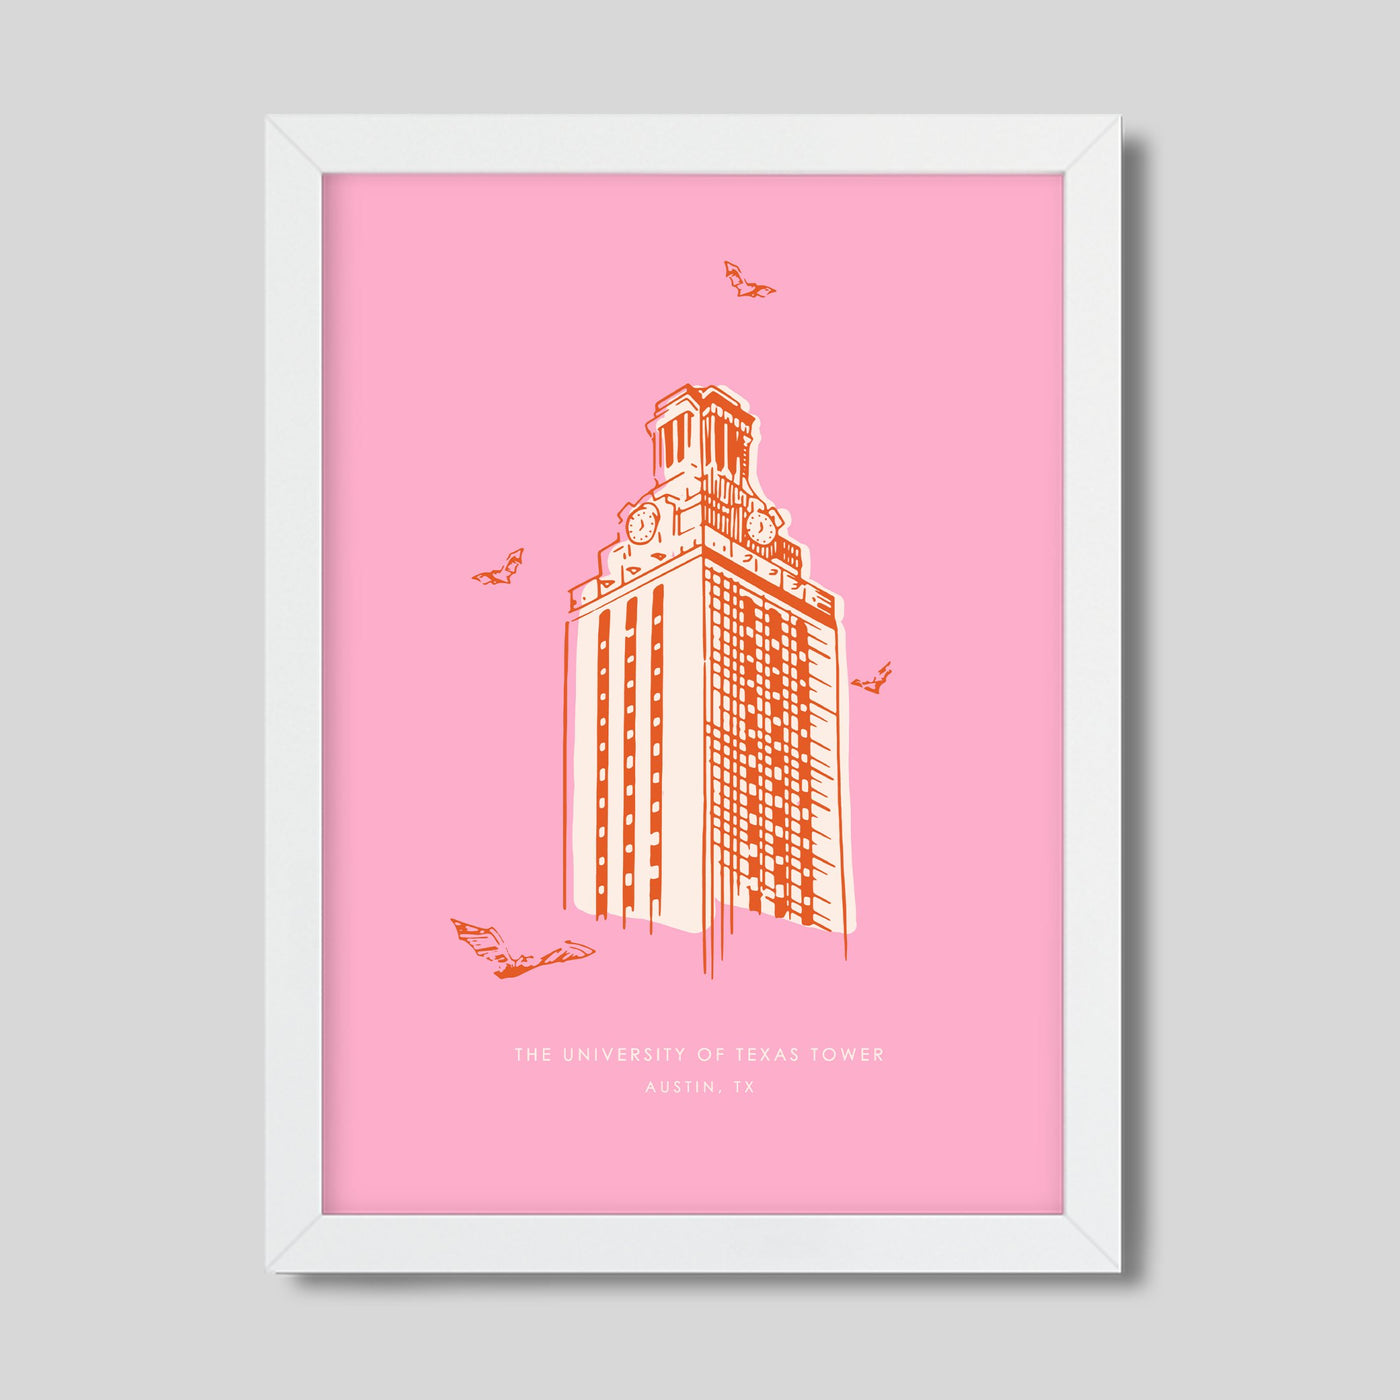 Gallery Prints Pink Print / 8x10 / White Frame 10152 Torino Tower Print dombezalergii